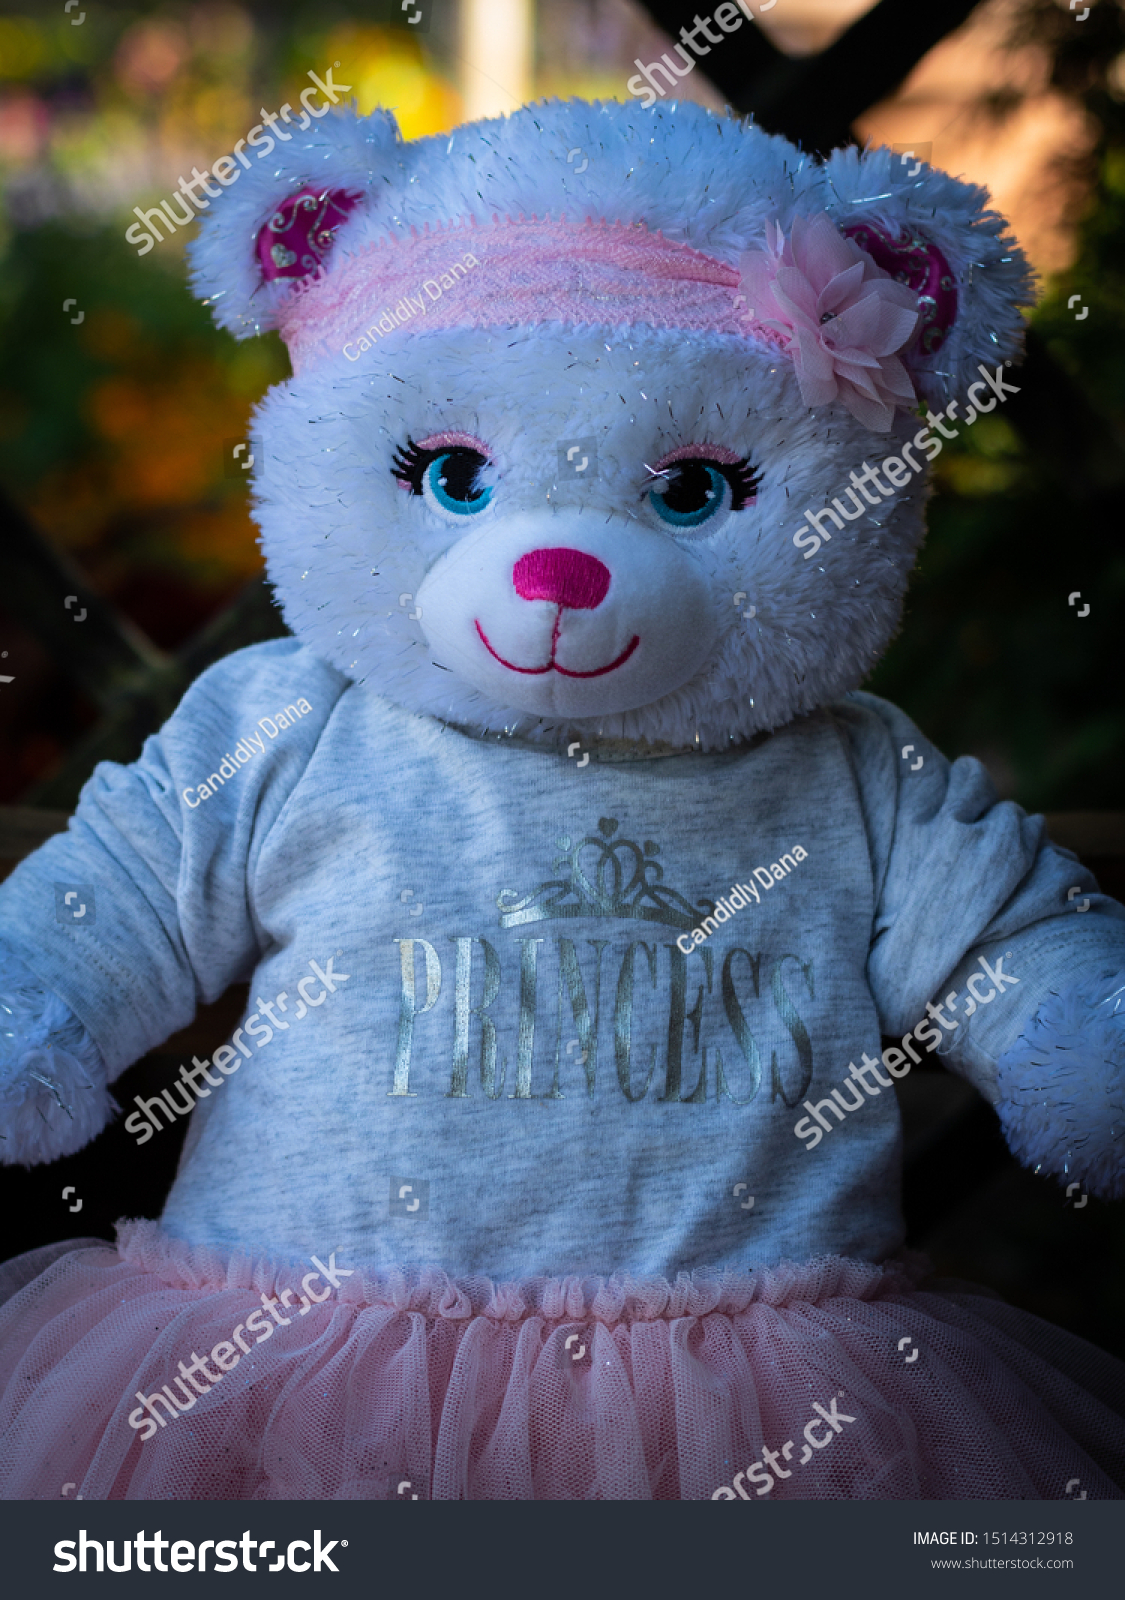 princess teddy